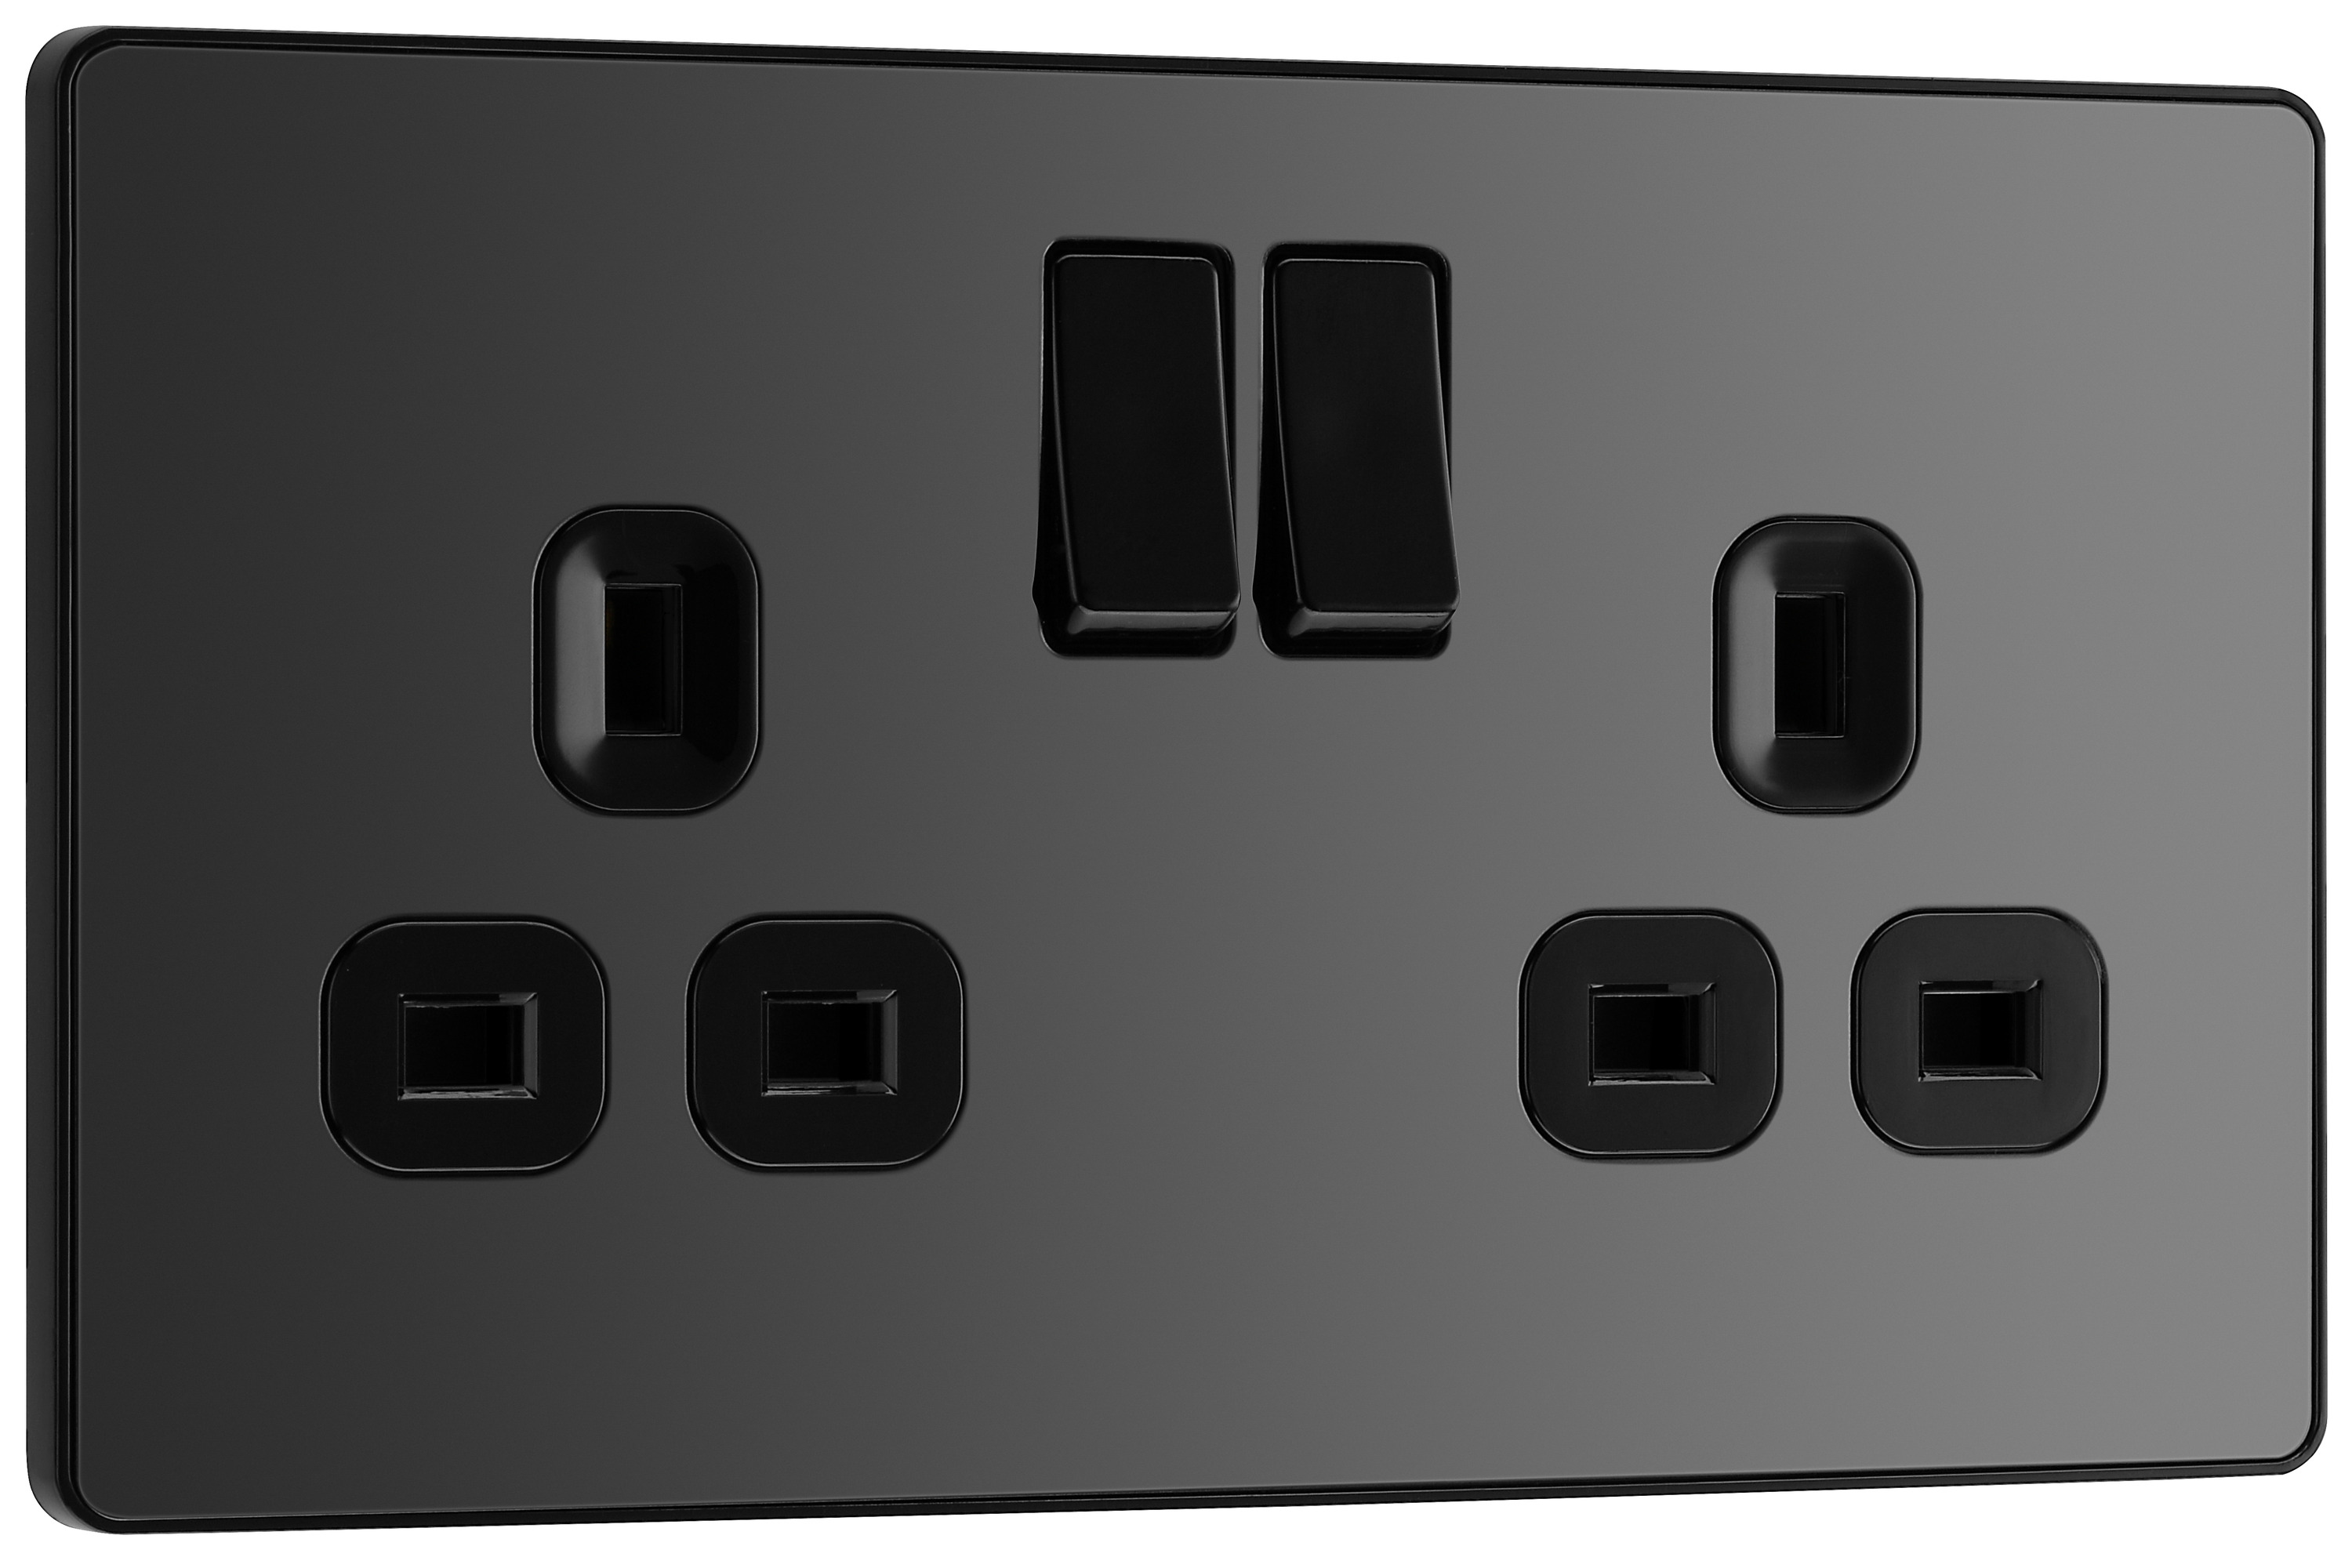 BG Evolve Black Chrome 13A Double Switched Power Socket